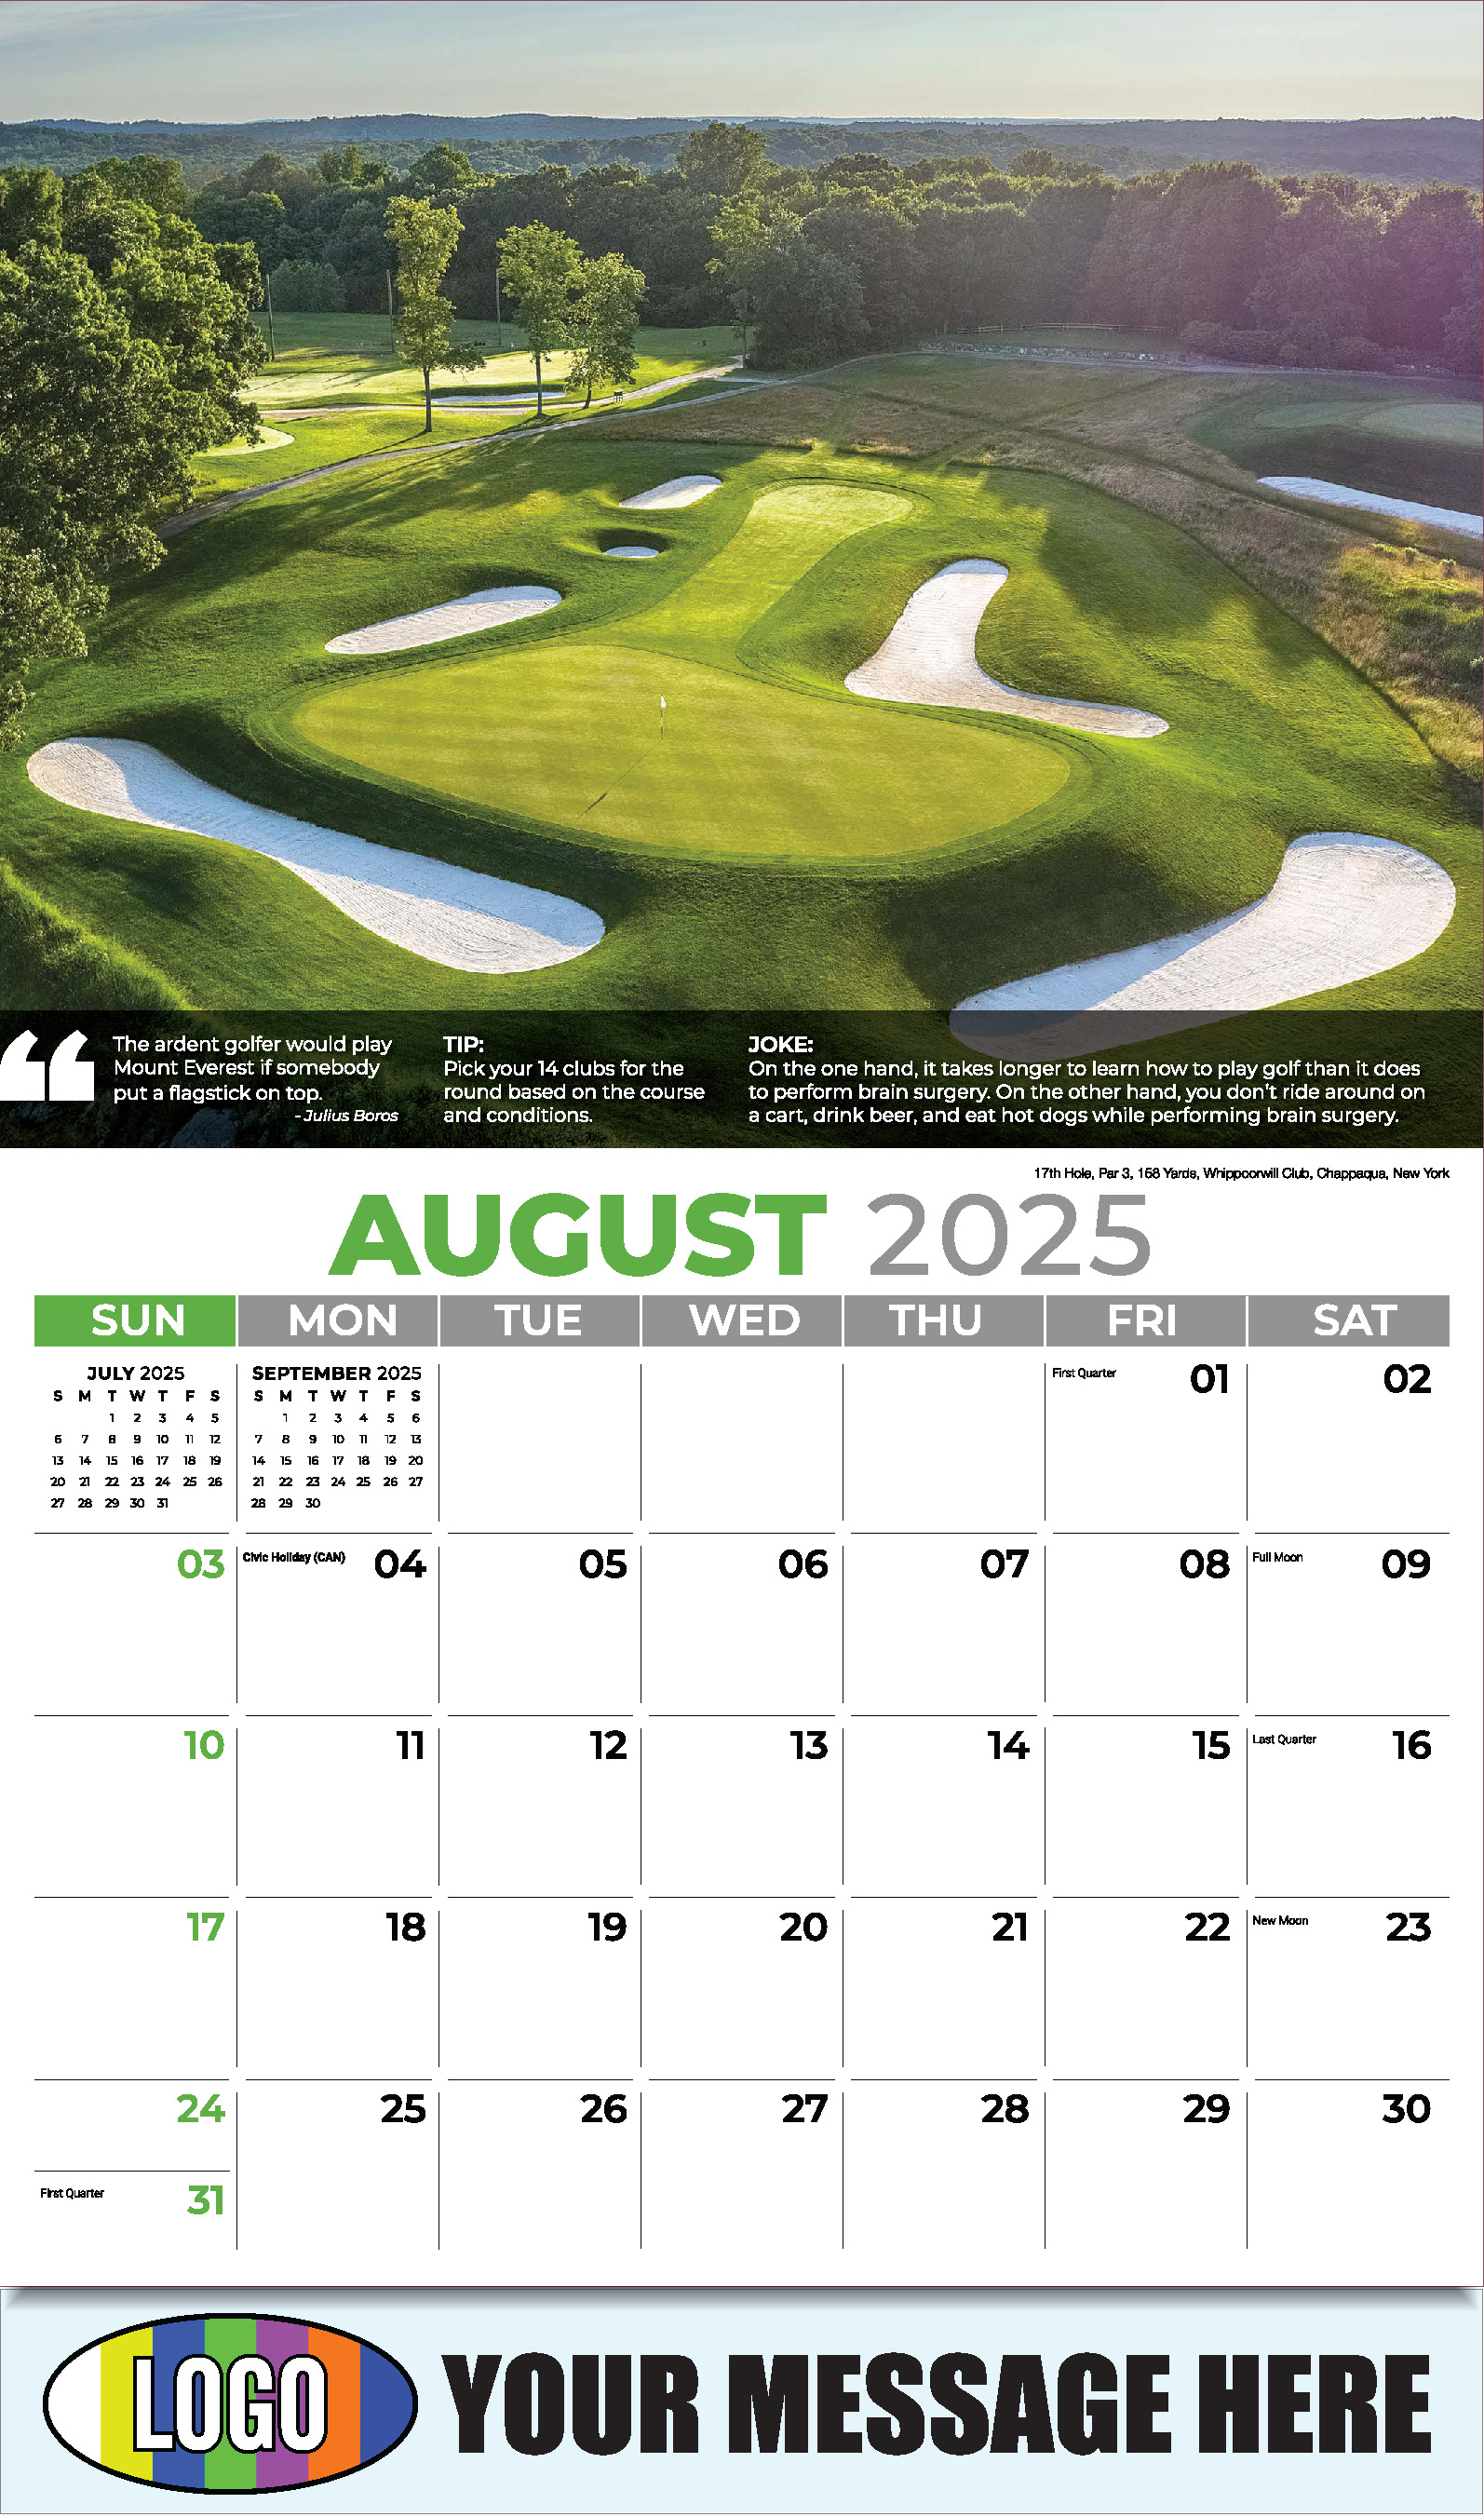 Golf Tips 2025 Business Promo Calendar - August